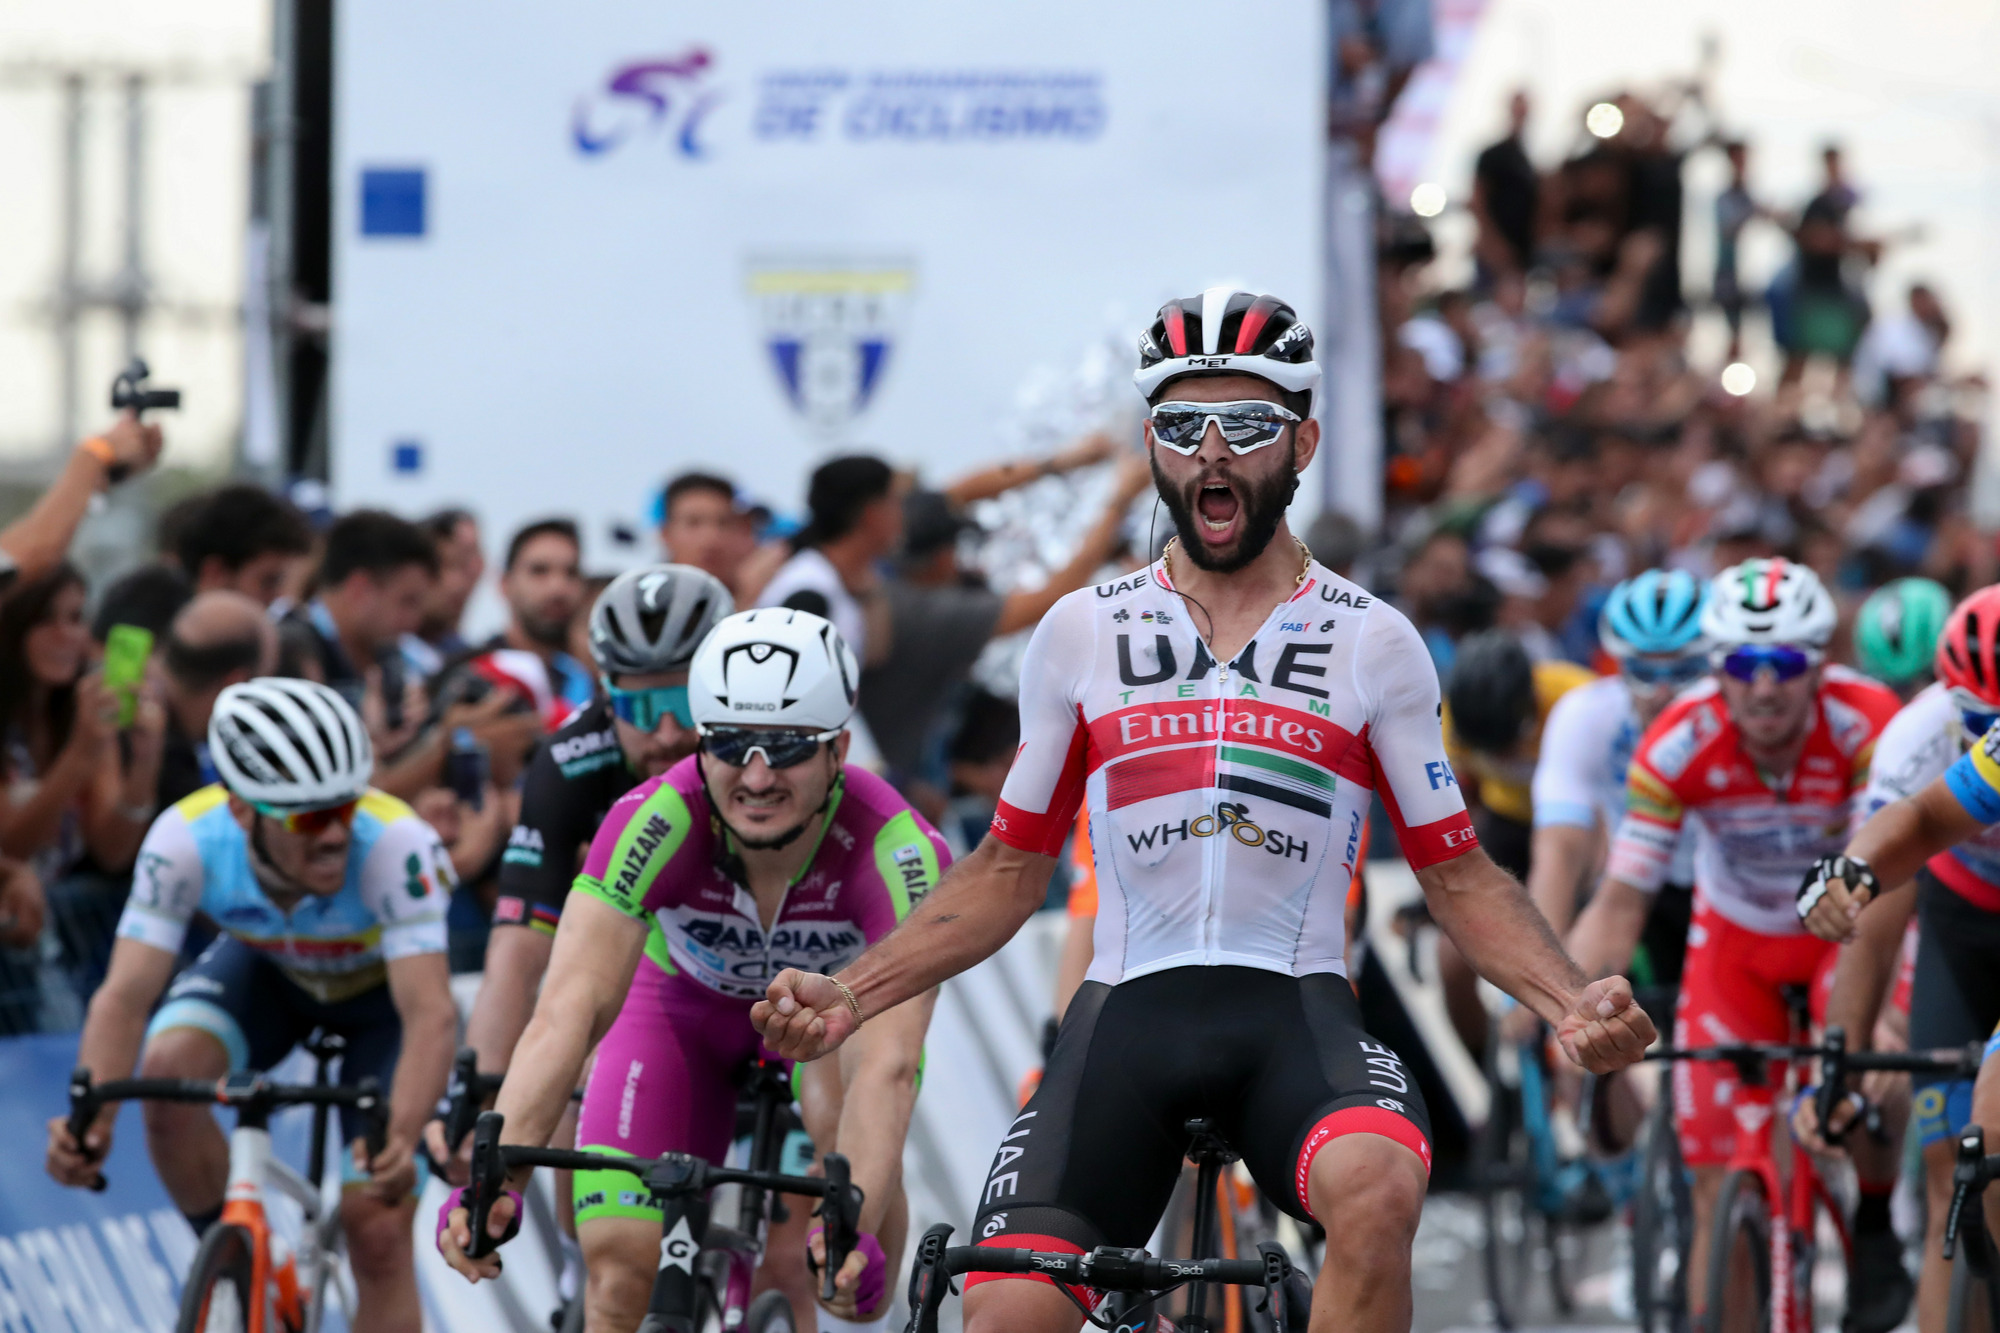 Vuelta a San Juan: Gaviria wins stage 2, takes overall lead | Cyclingnews